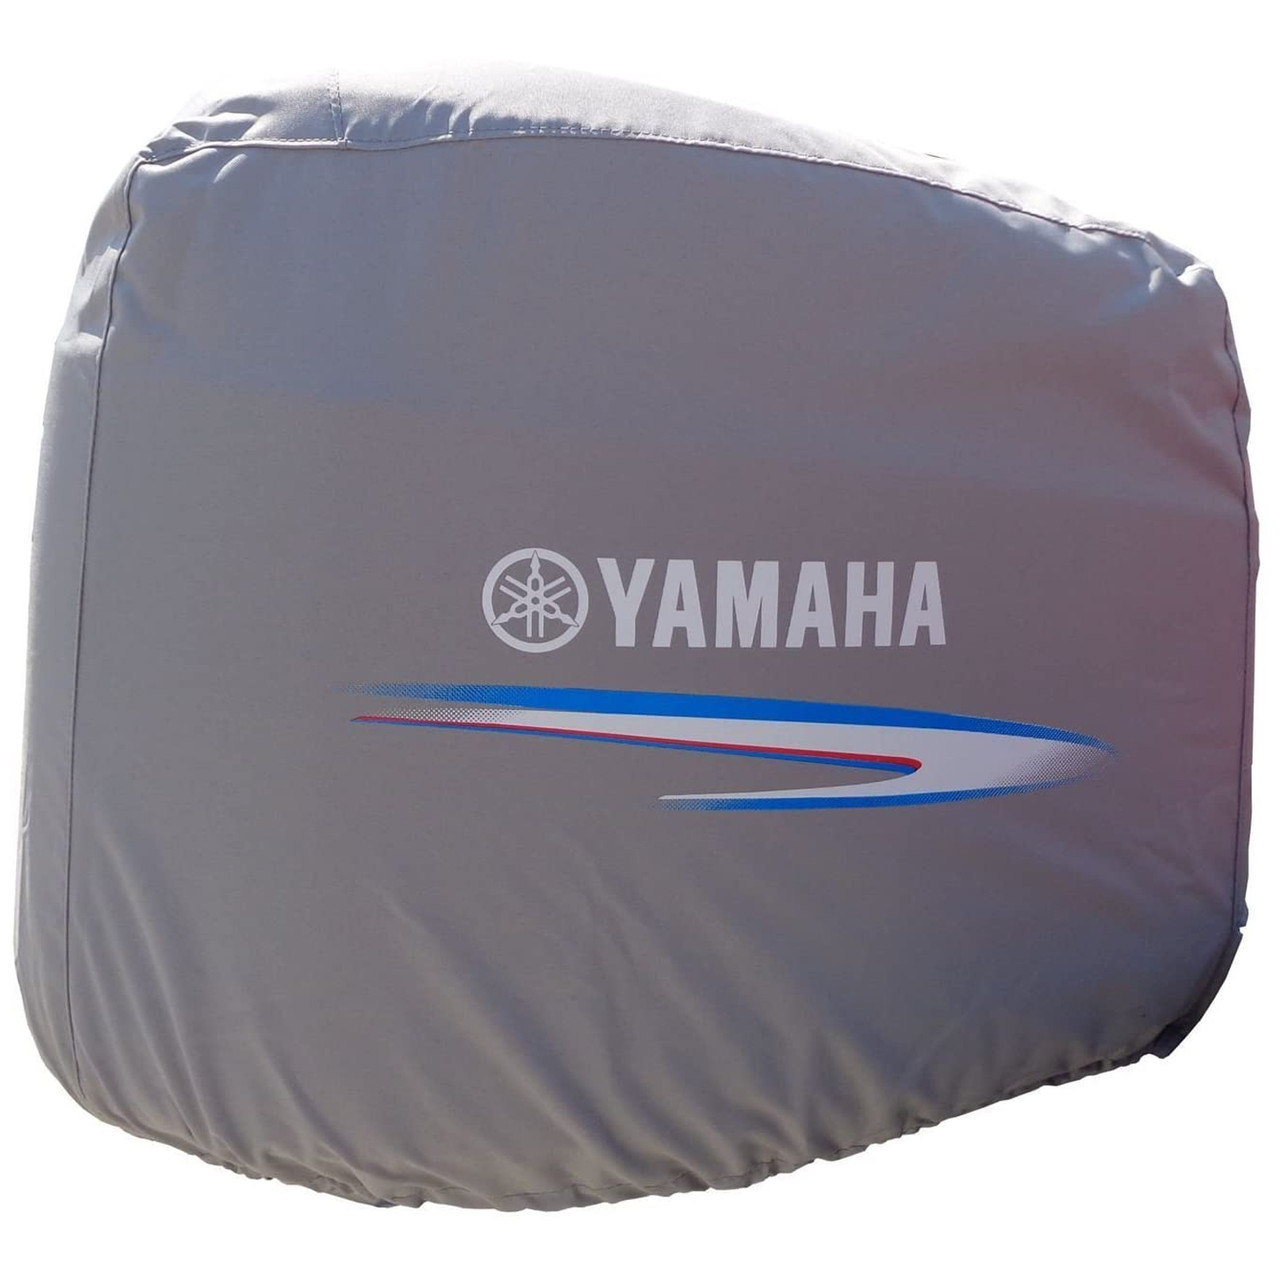 Yamaha New OEM, Heavy Duty UV Resistant Non-Vented Motor Cover, MAR-MTRCV-11-11